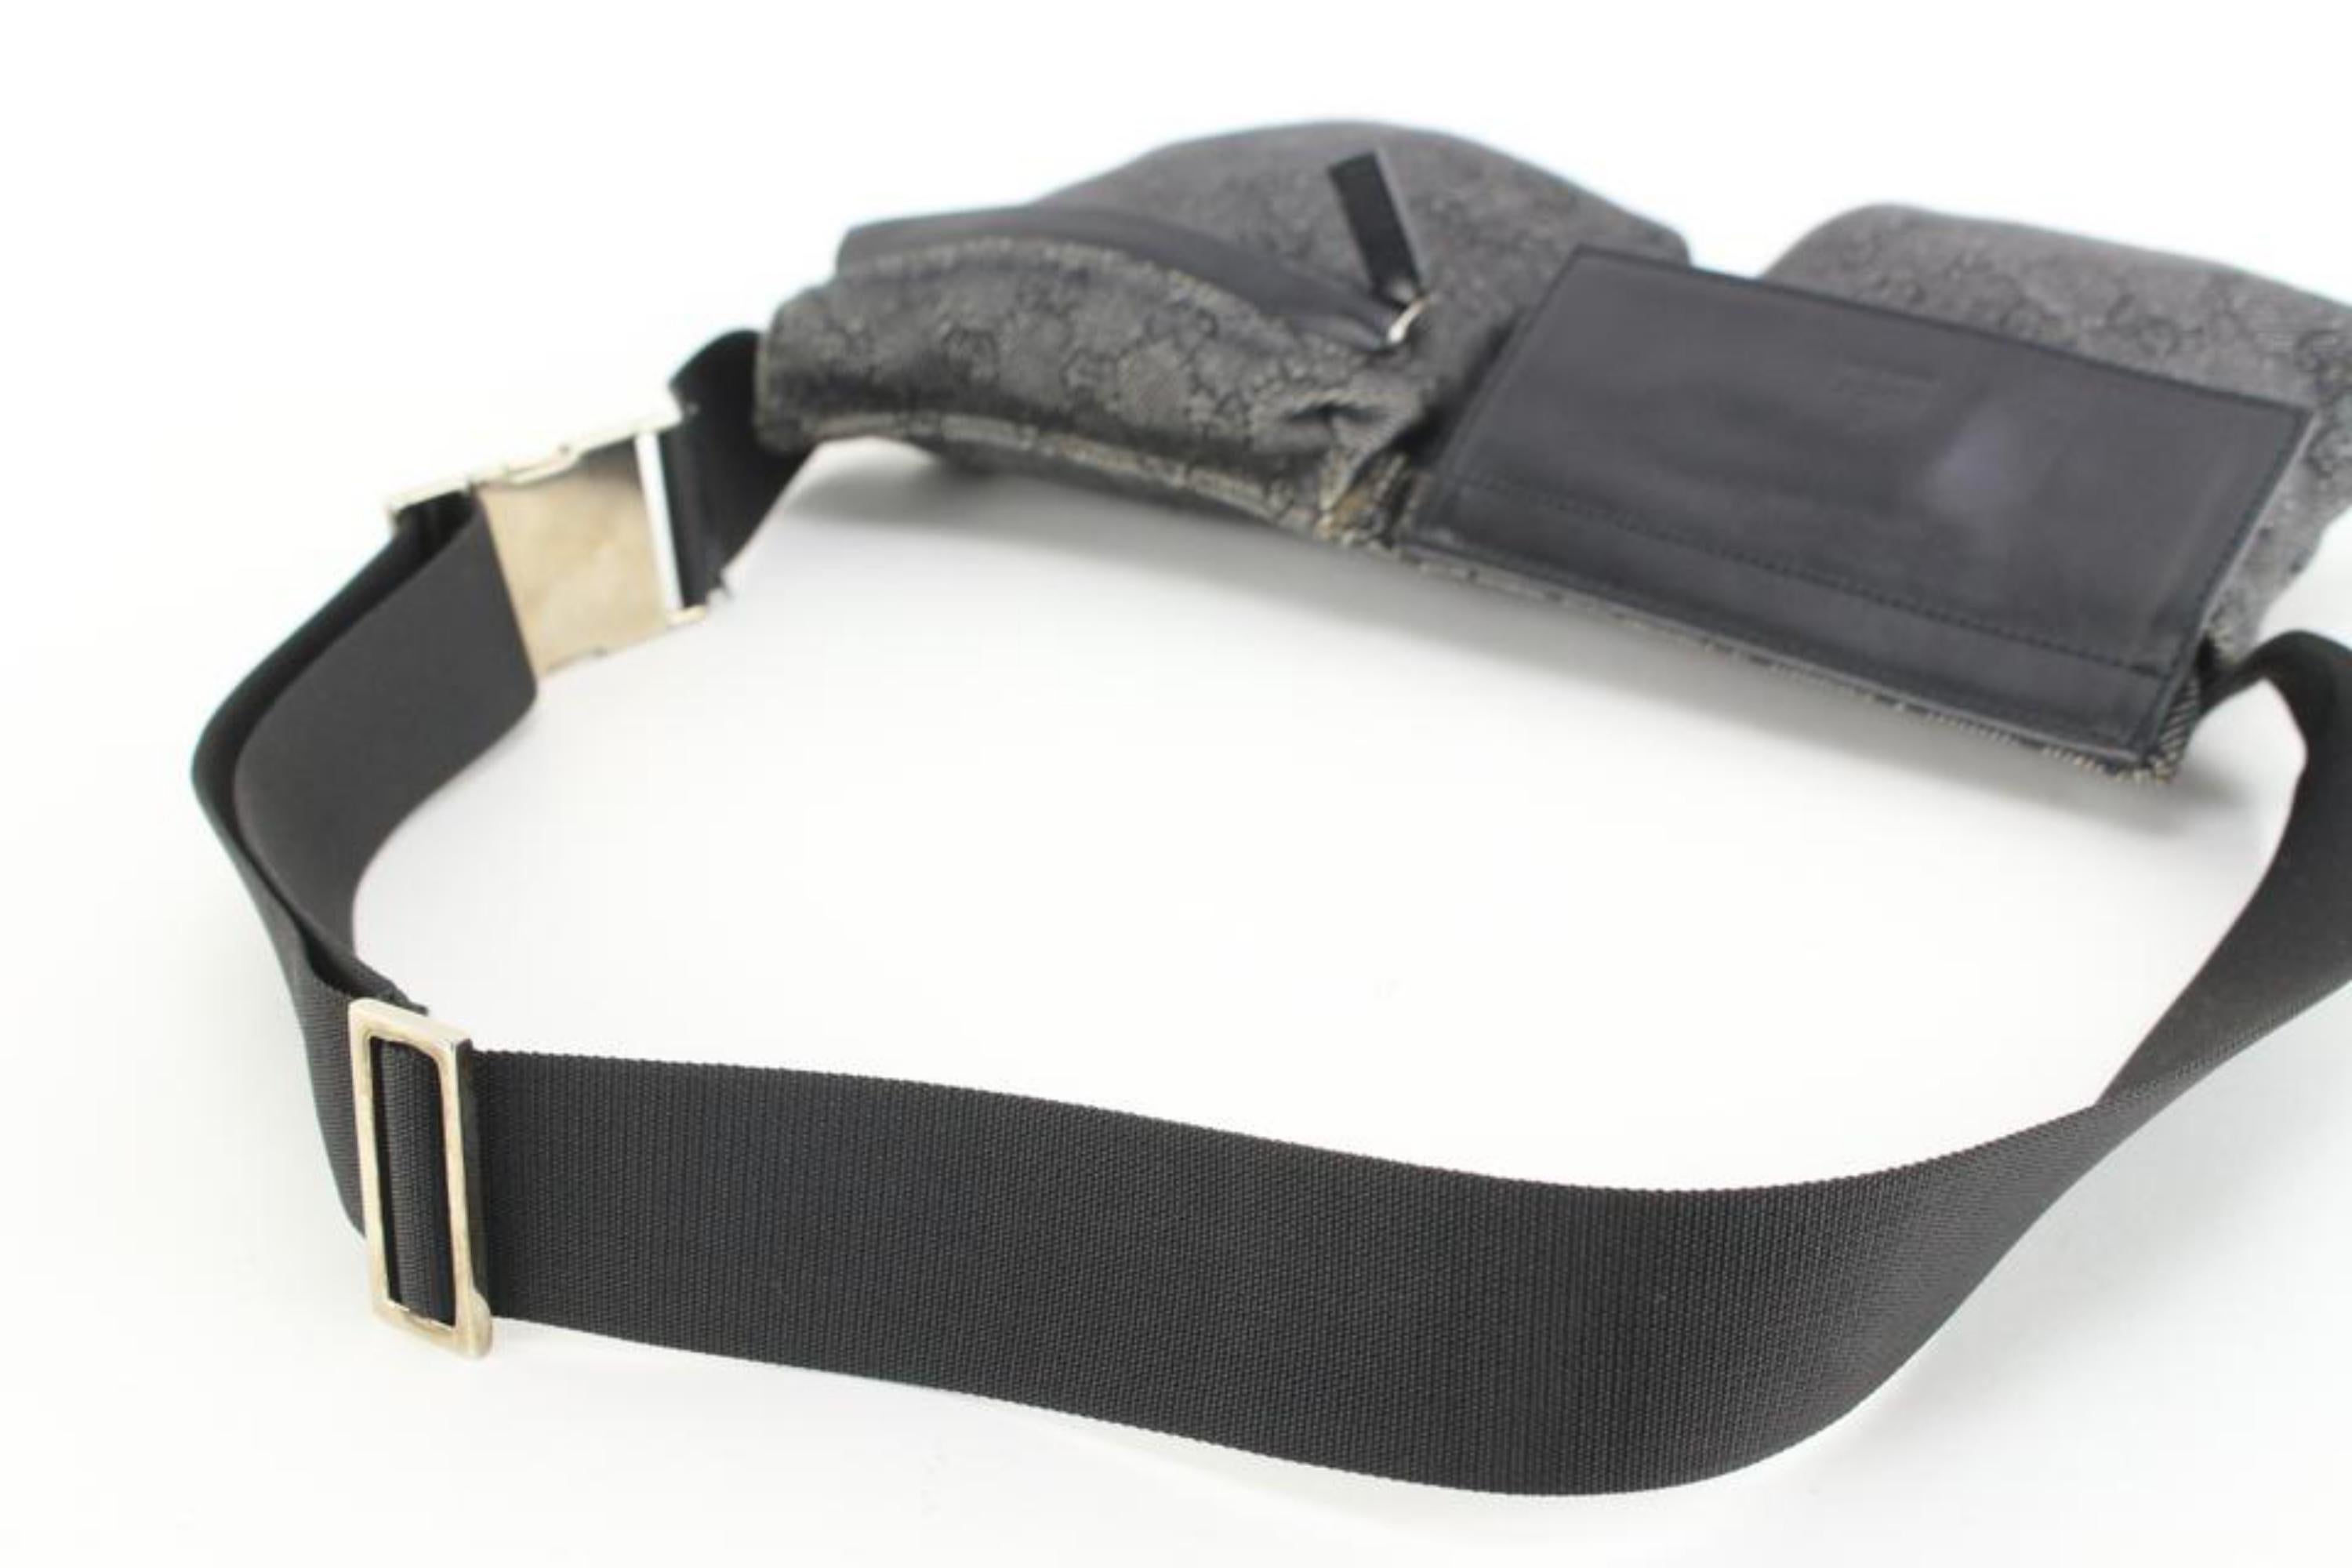 Gucci Charcoal Denim Monogram GG Belt Bag Waist Bag Fanny Pack 36g83s 2